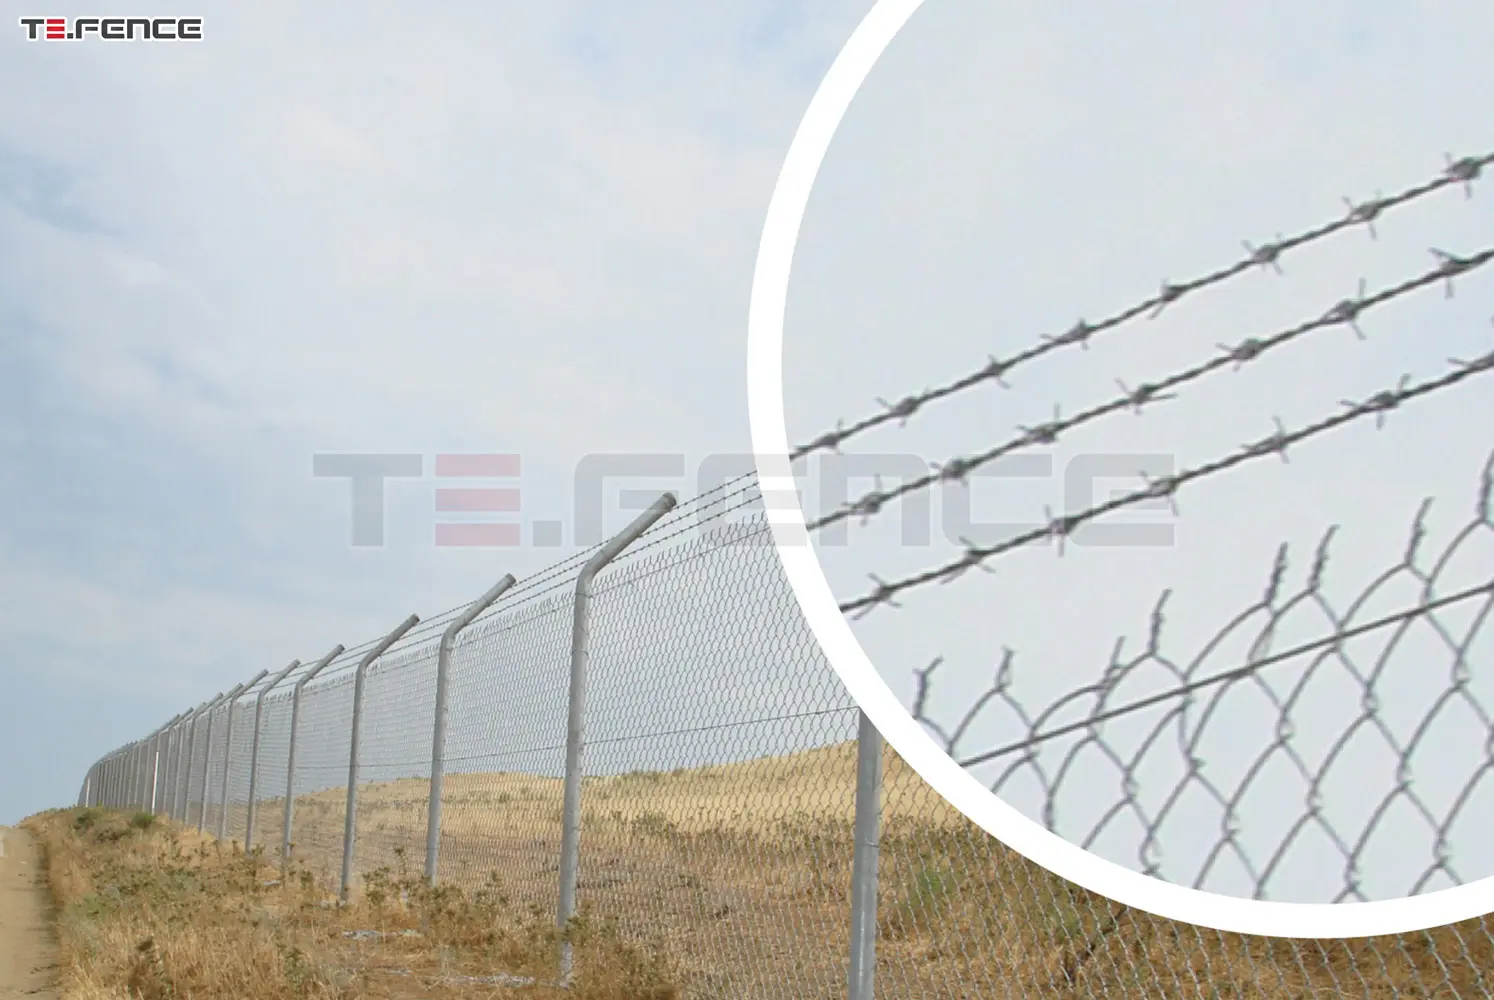 Alambre de espino - European Security Fencing